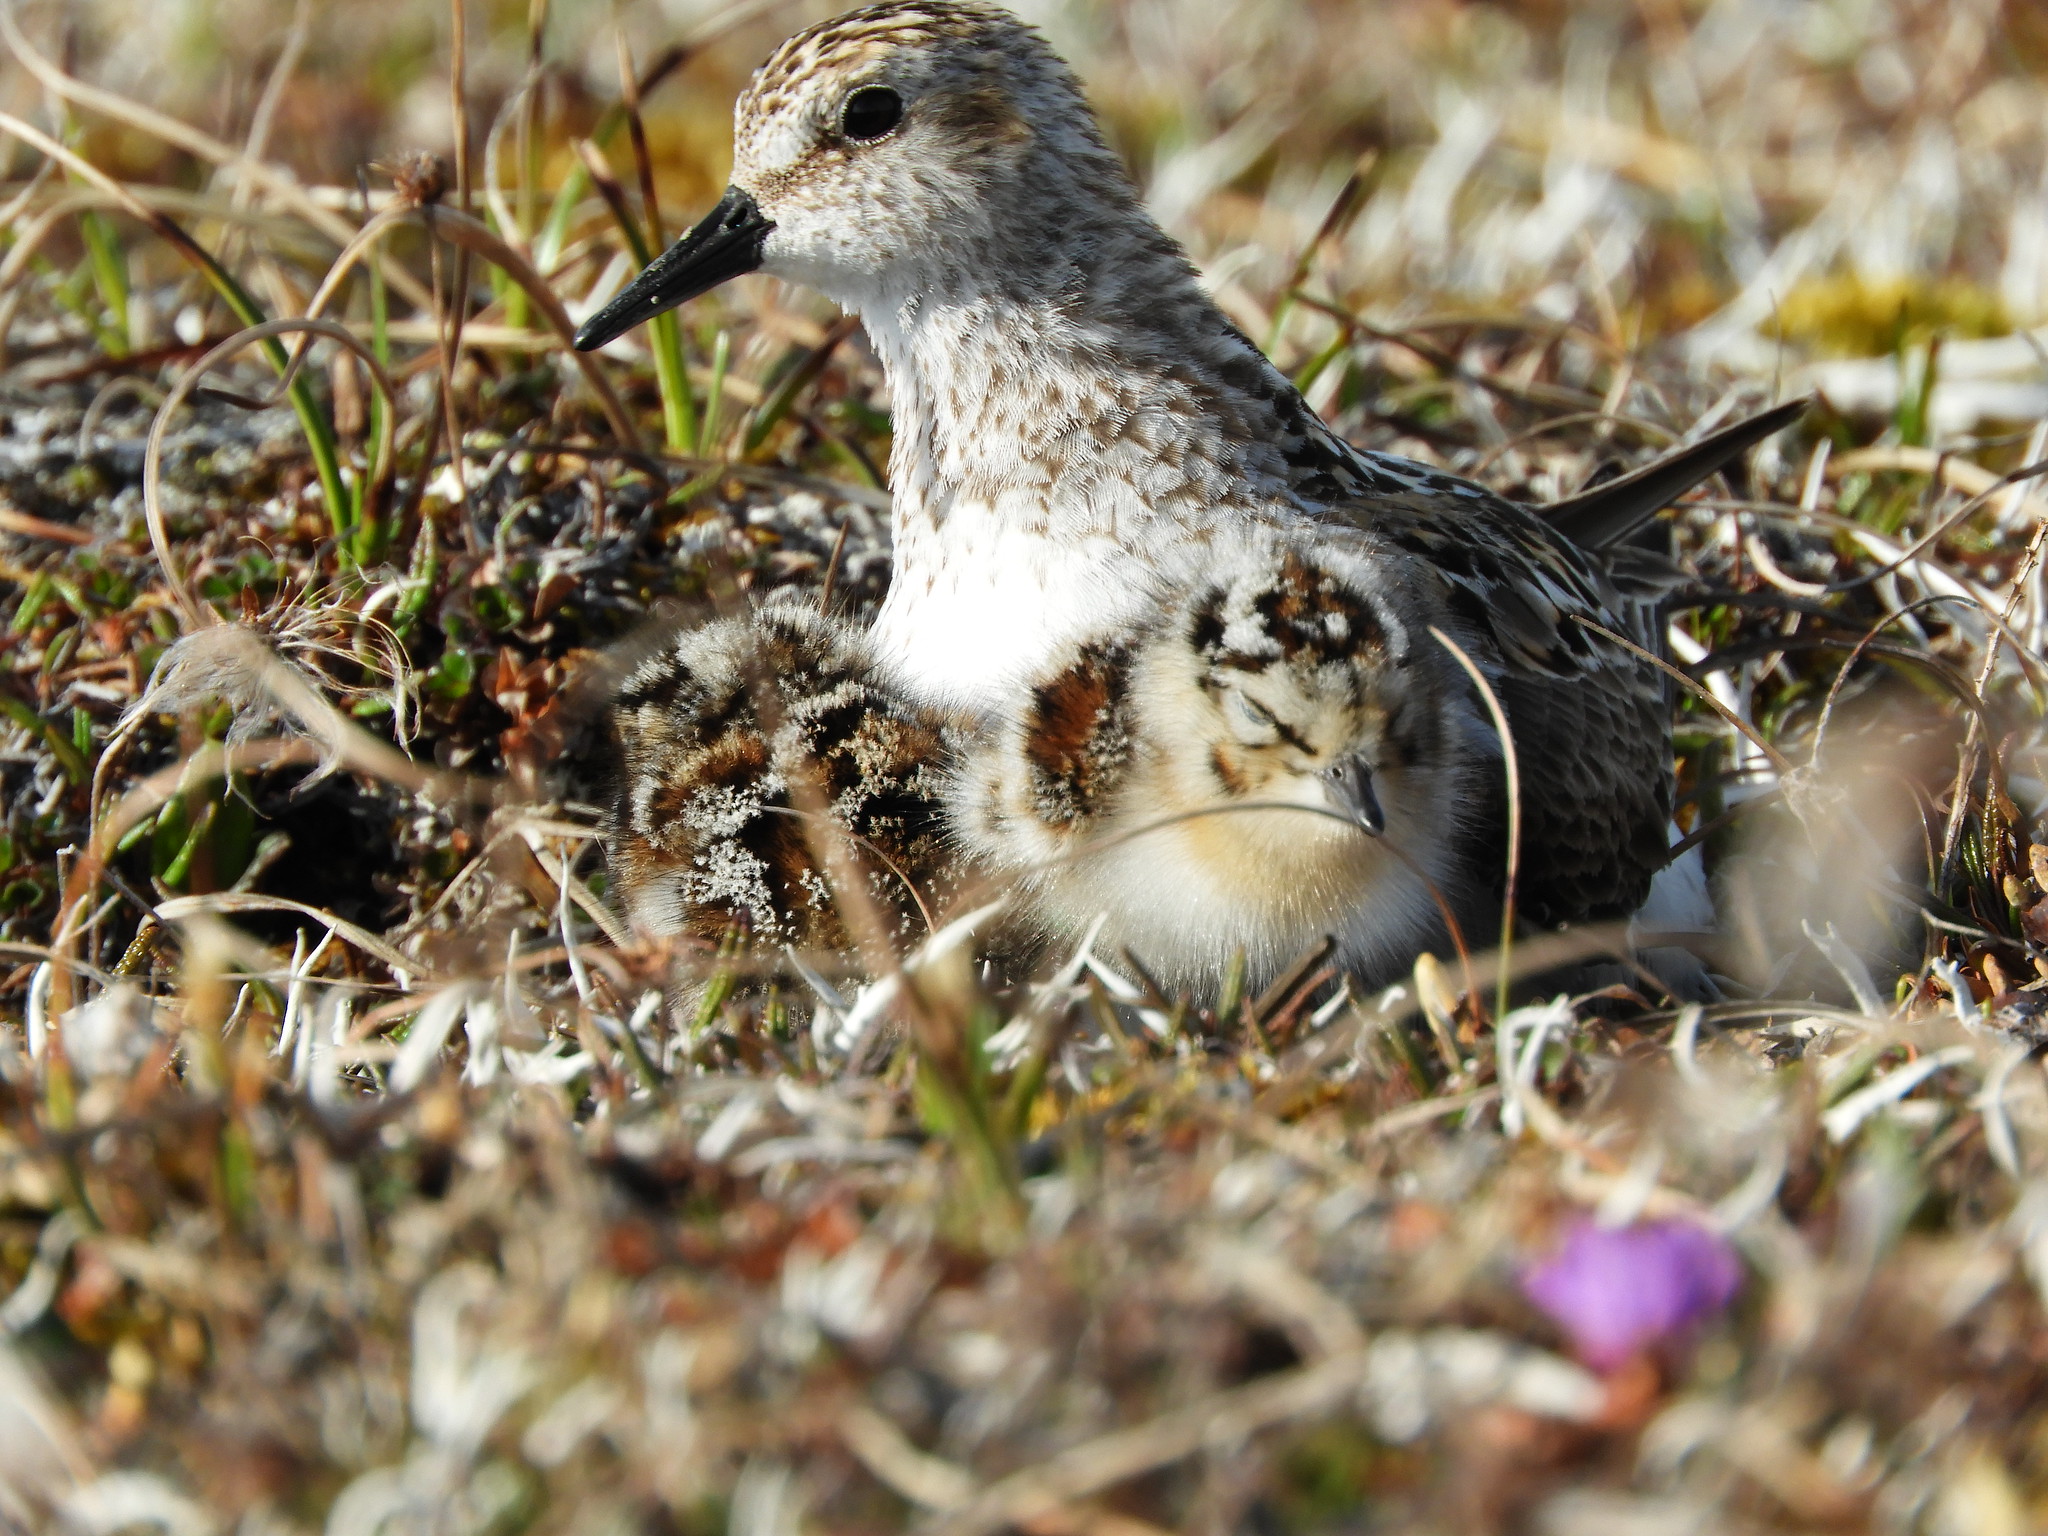 Semipalmated sandpiper and chicks in grasses.